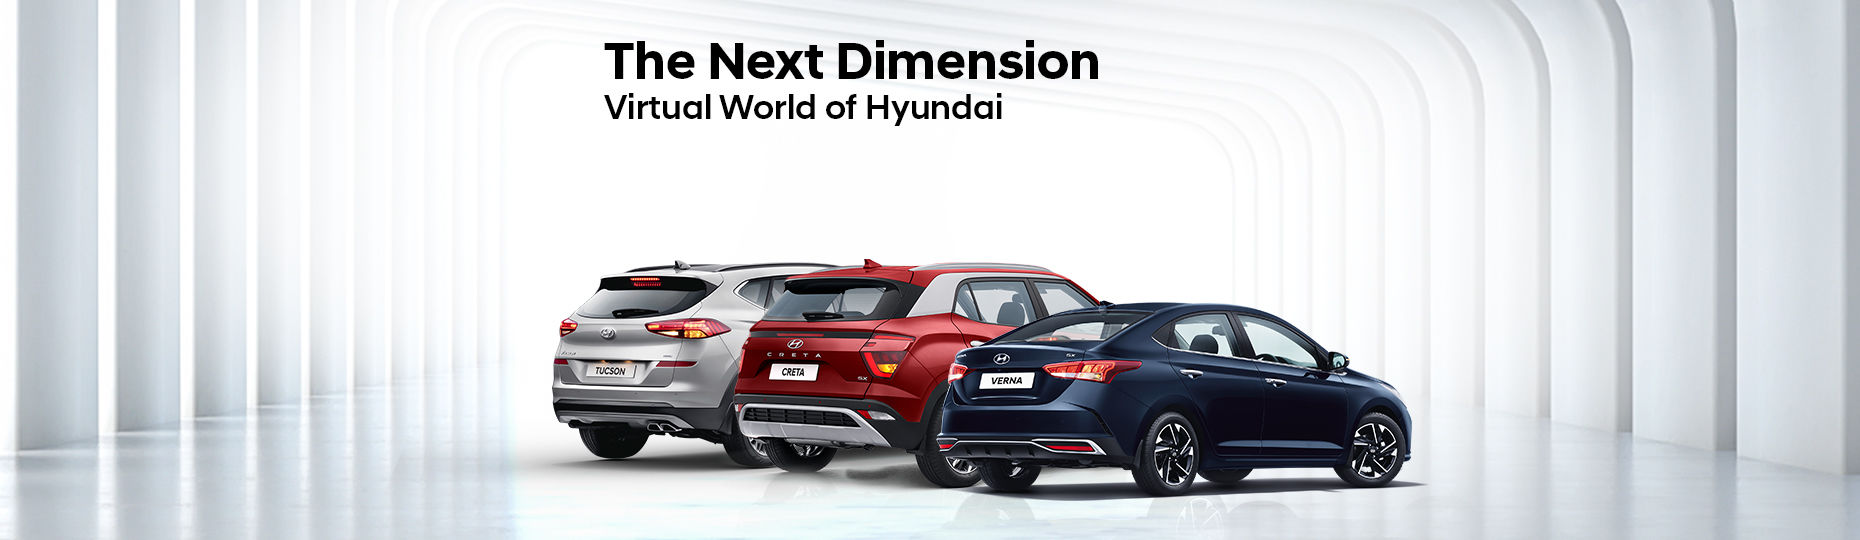 The next dimension virtual world of Hyundai